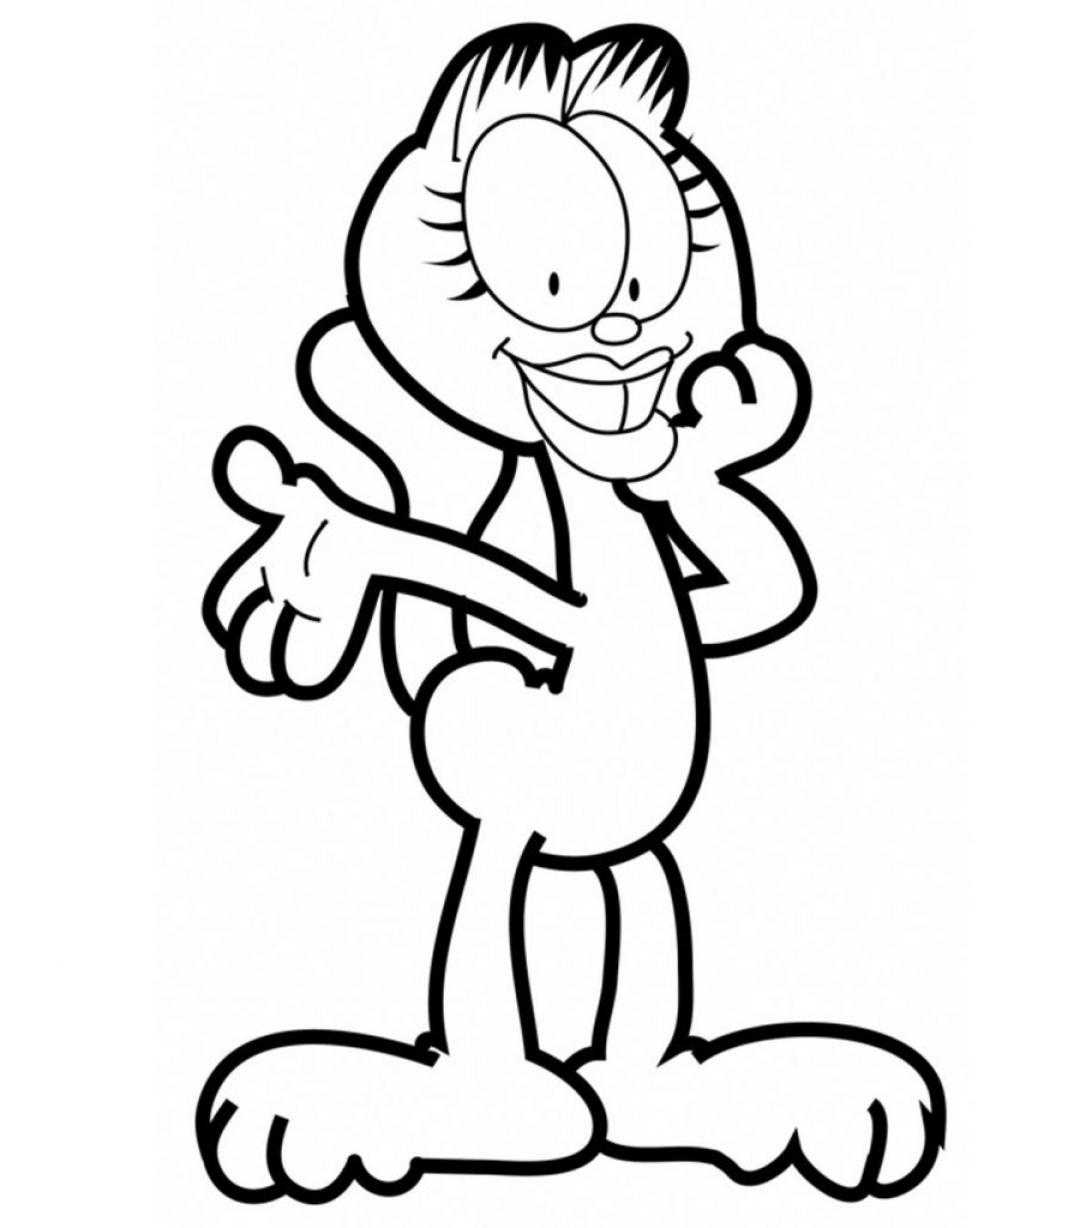 Printable Garfield Coloring Pages Online - SheetalColor.com